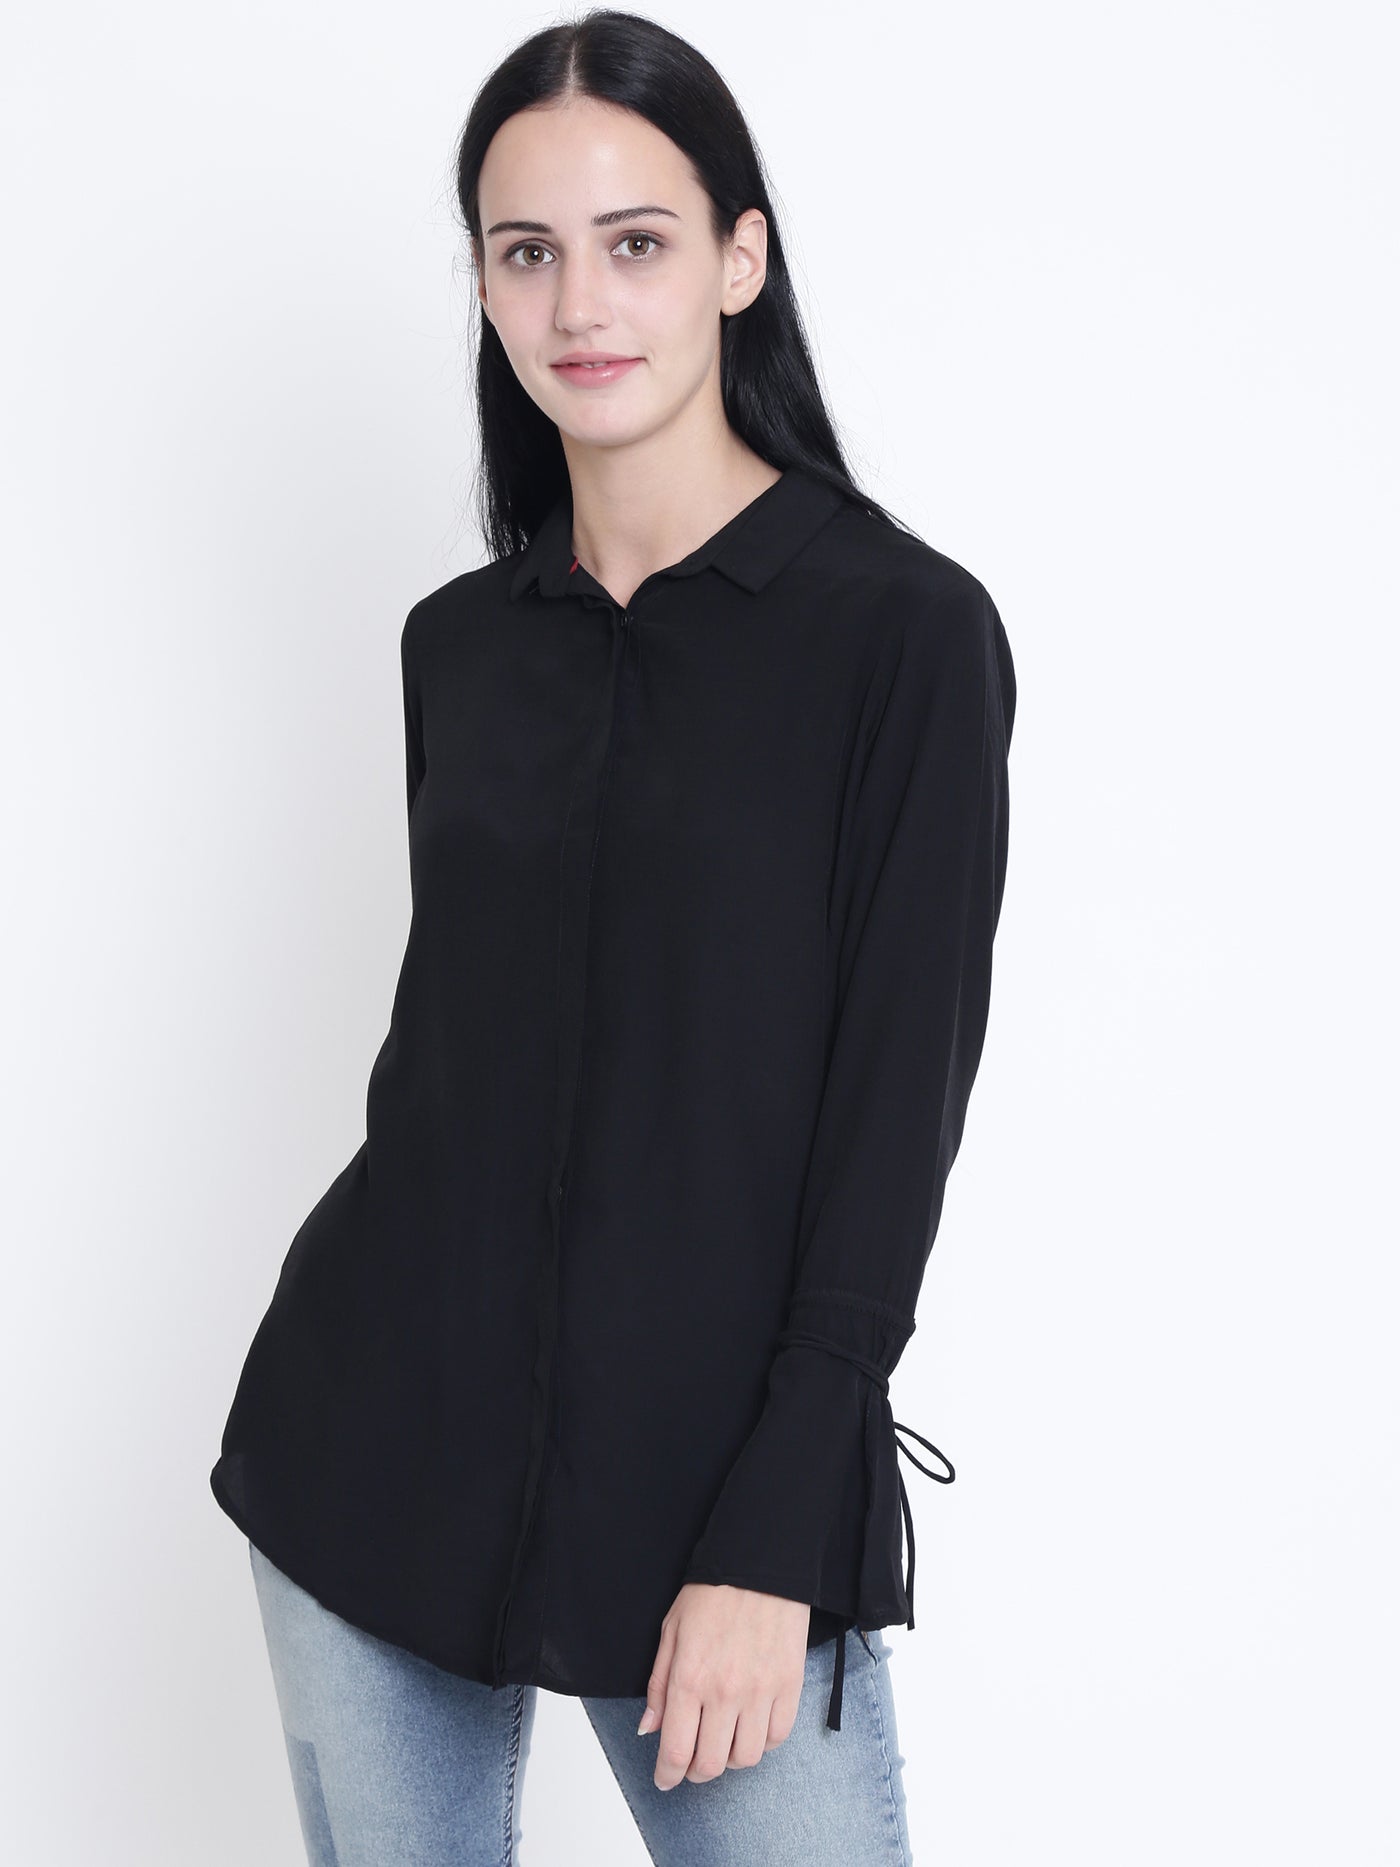 Black Full Sleeves Shirt - Women Shirts